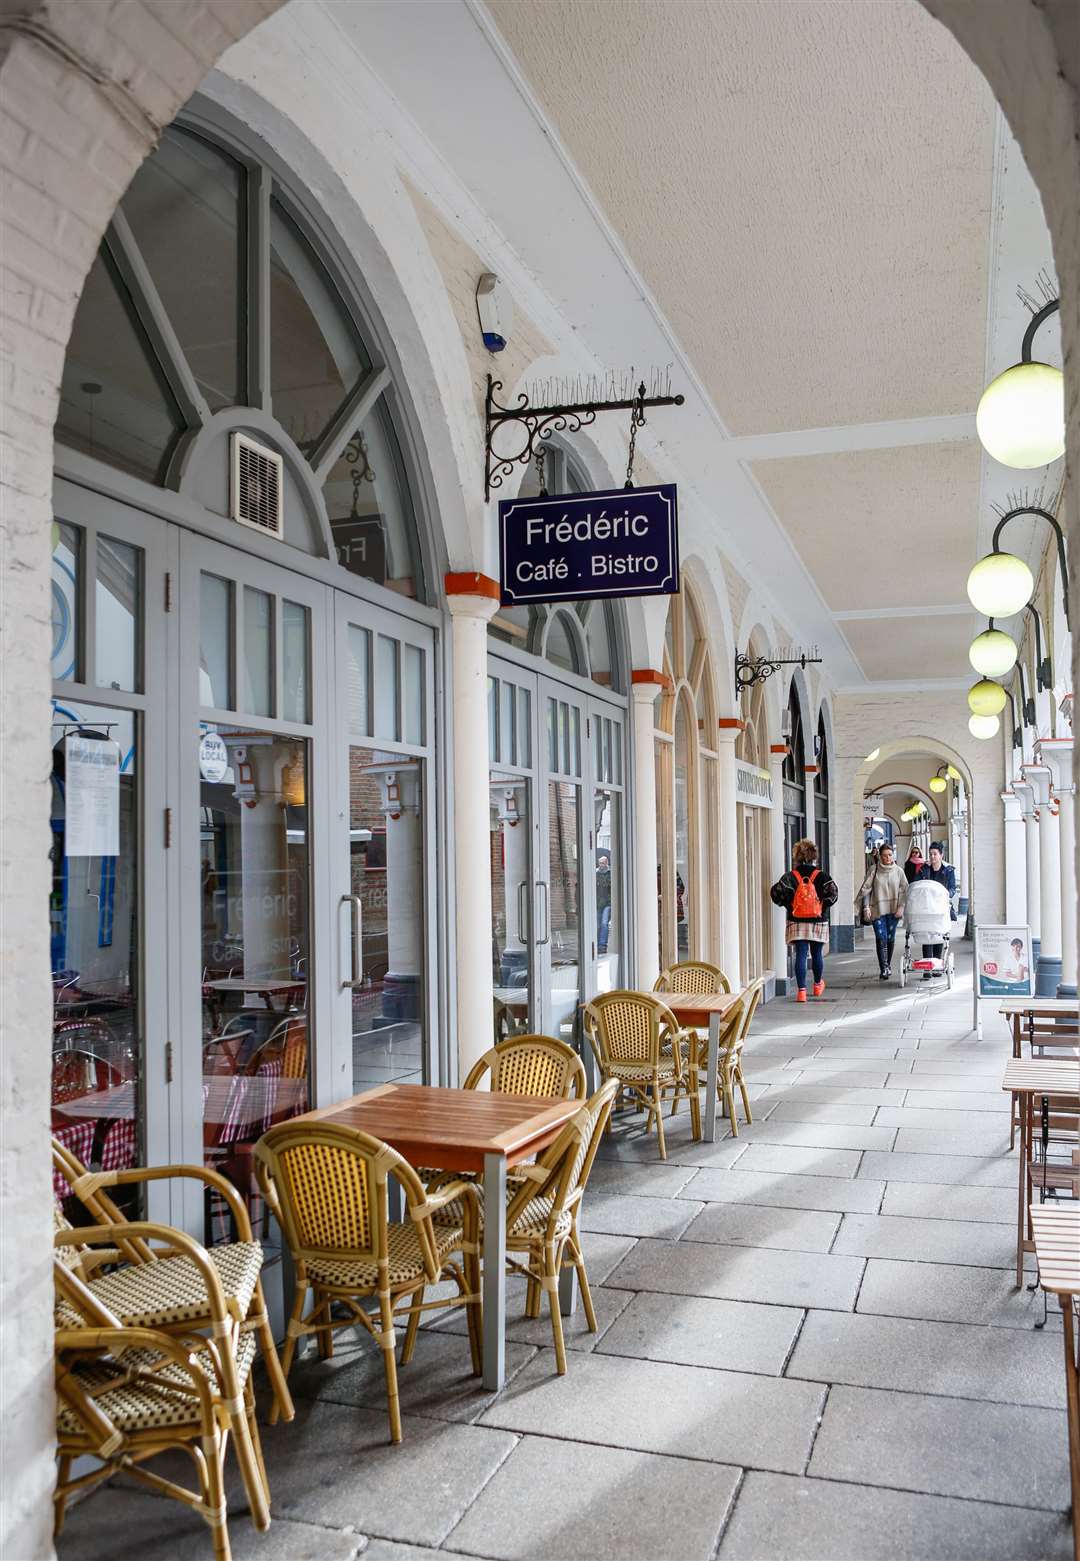 Frederic Cafe Bistro in Market Buildings, Maidstone. Picture: Matthew Walker